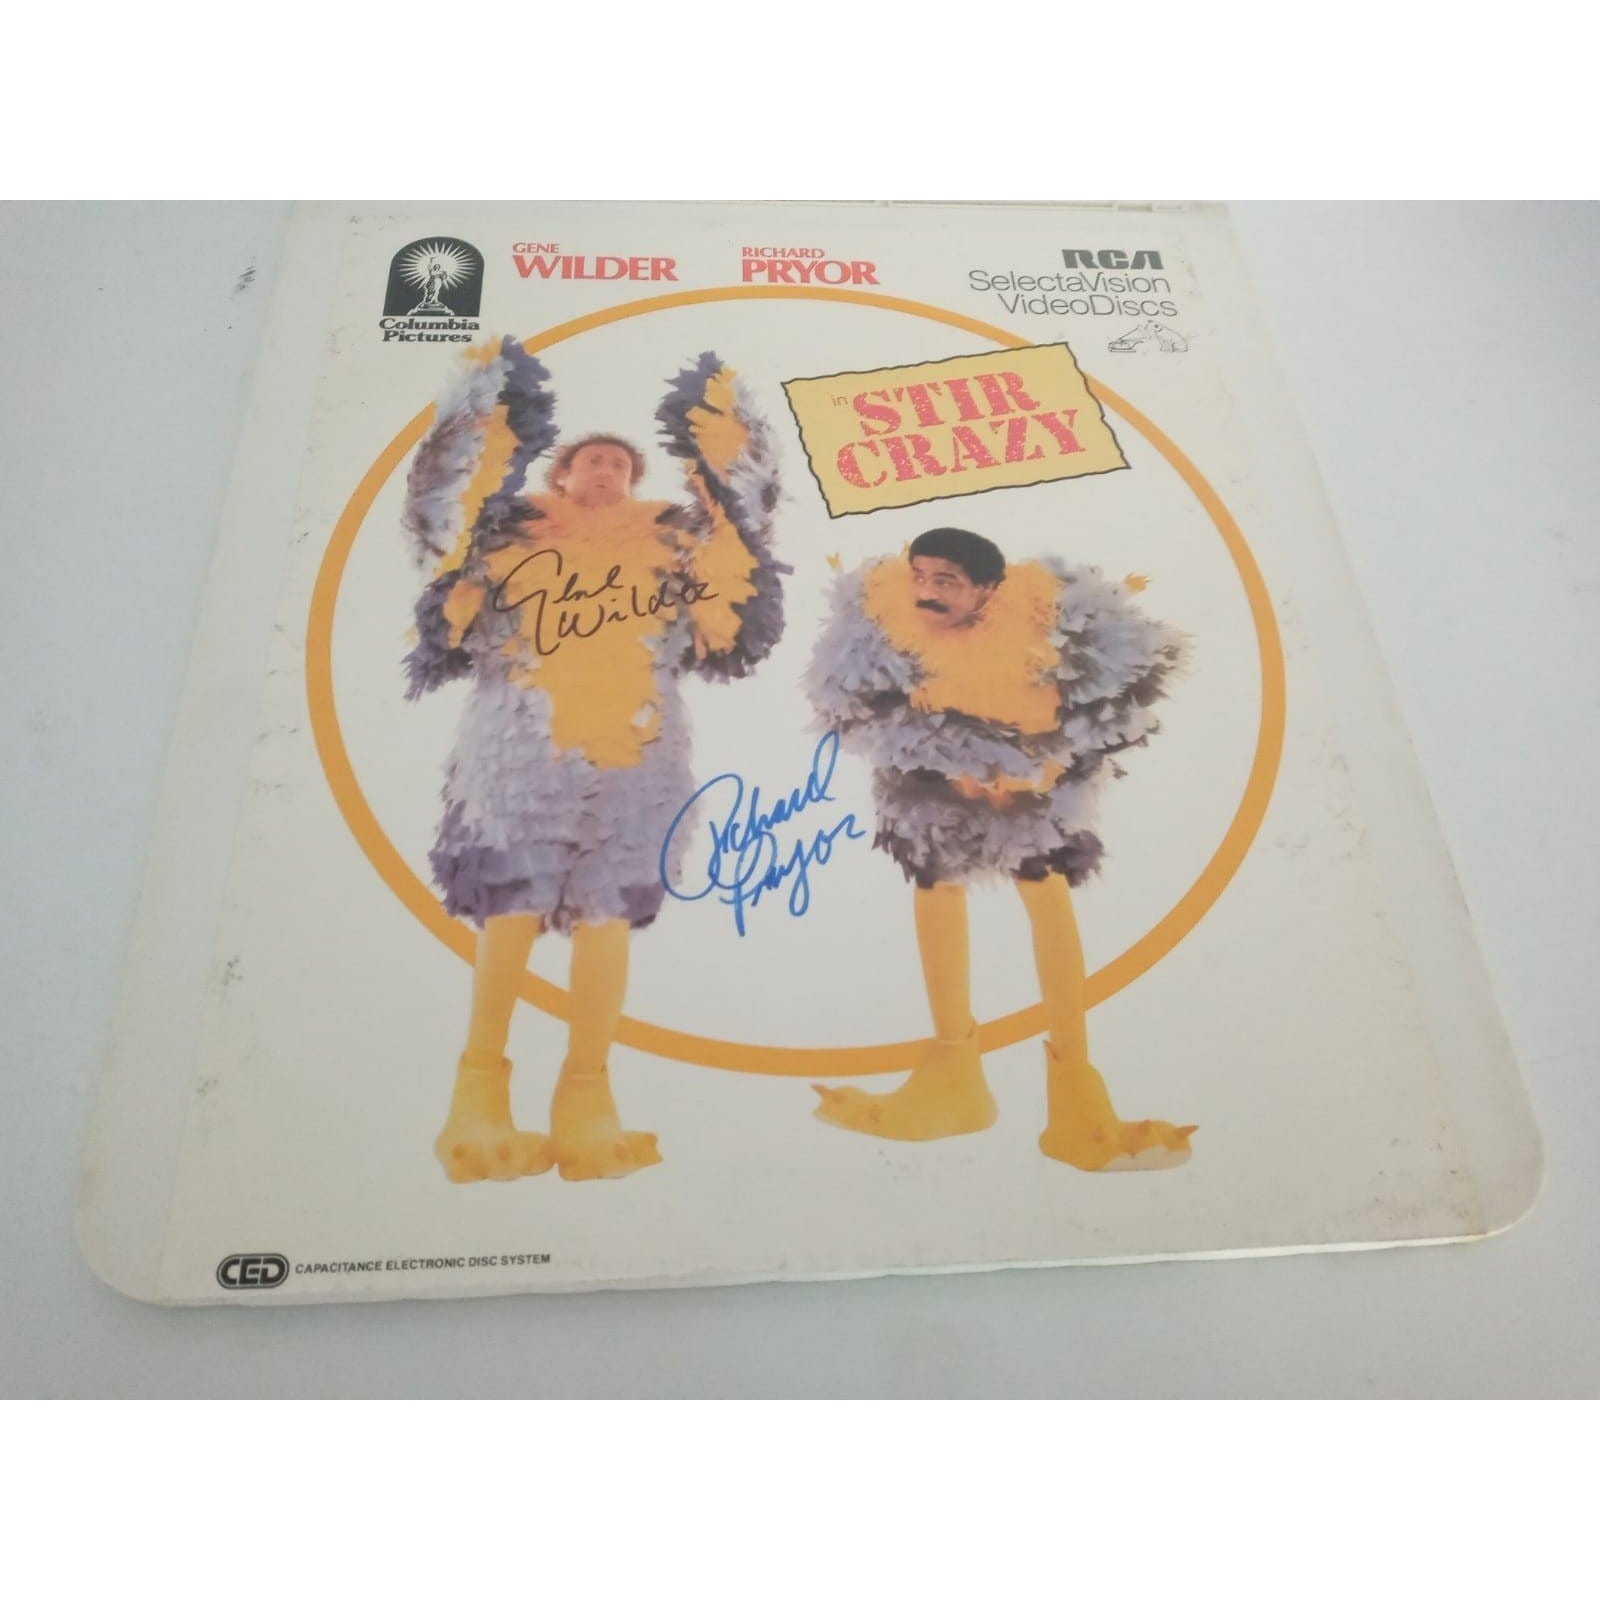 Richard Pryor Gene Wilder Stir Crazy signed video disc with proof